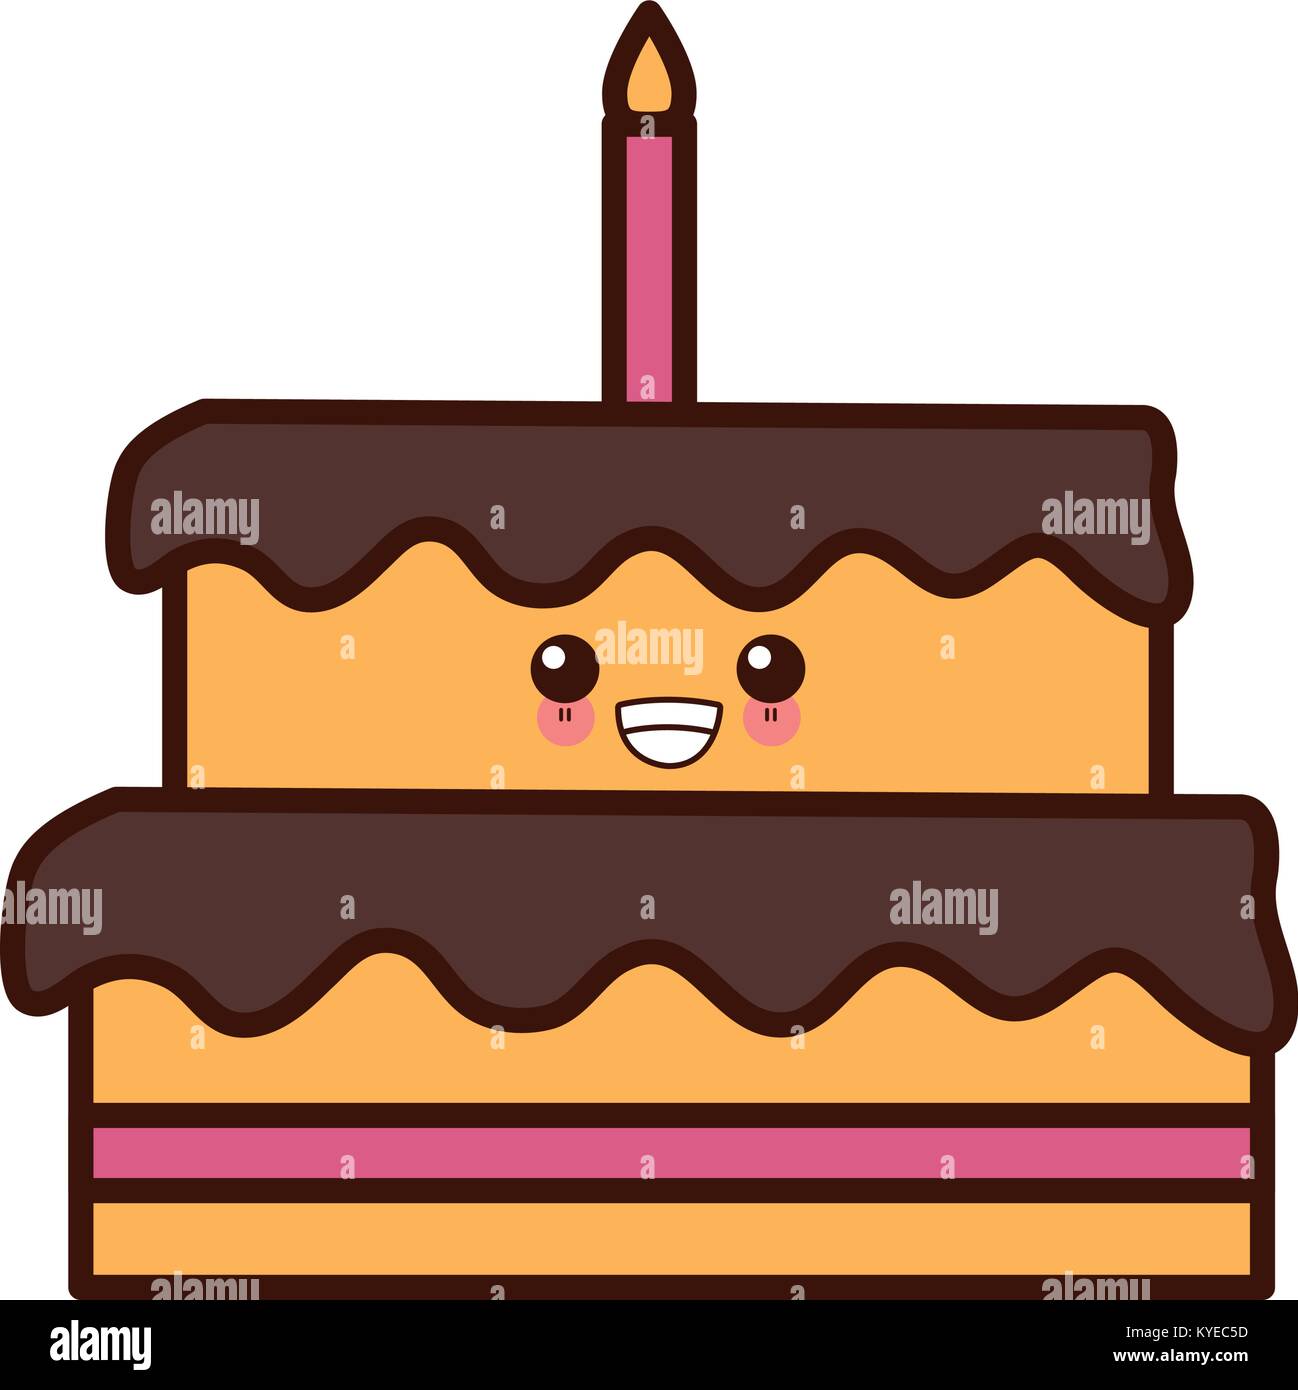 27+ Beautiful Image of Cartoon Birthday Cake - davemelillo.com | Cartoon  birthday cake, Art birthday cake, Birthday cake clip art